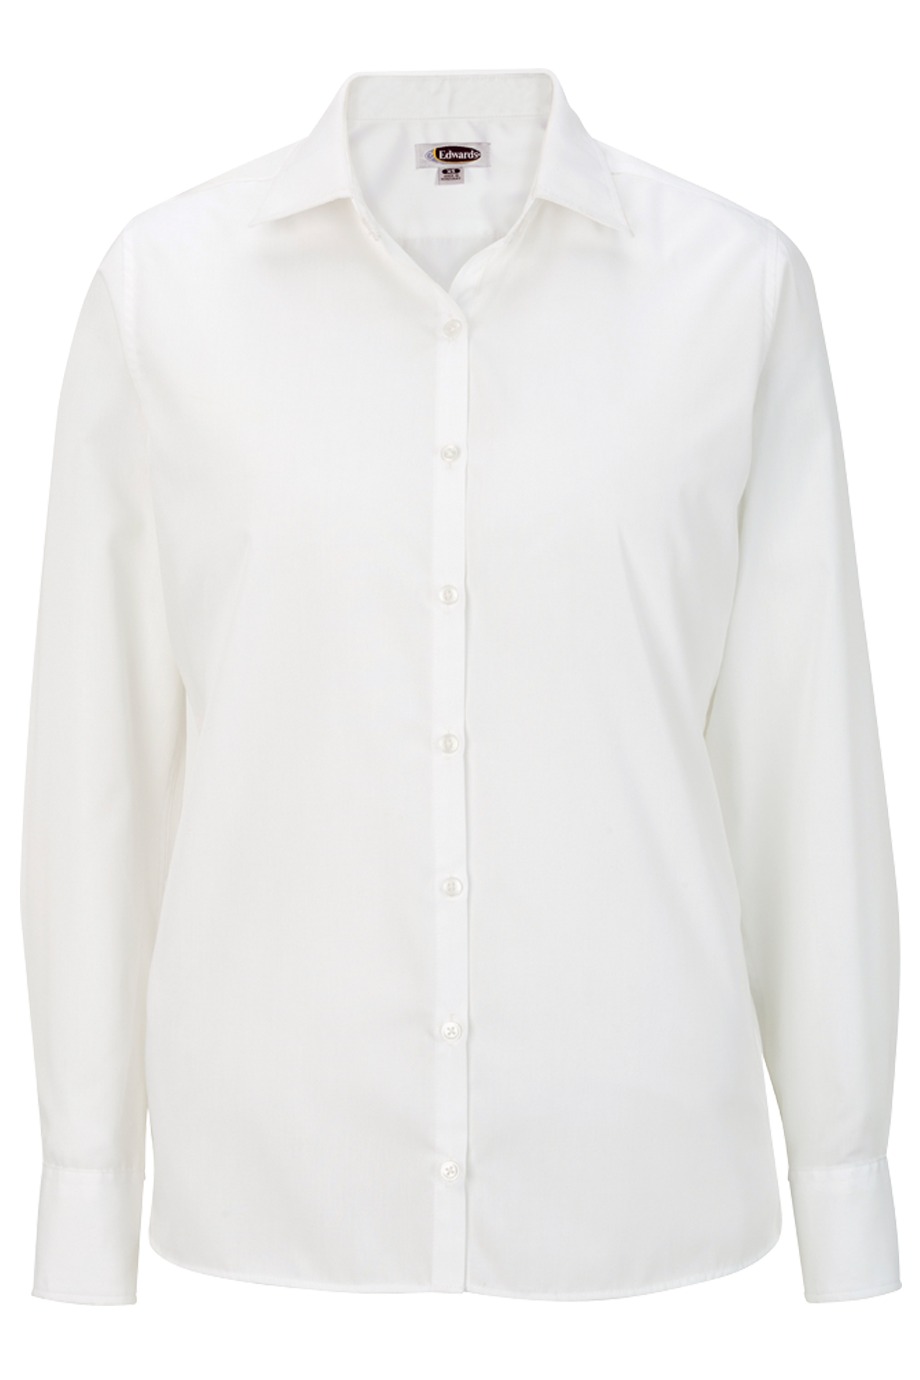 Edwards Garment 5273 - Ladies Poplin LongSleeve Shirt